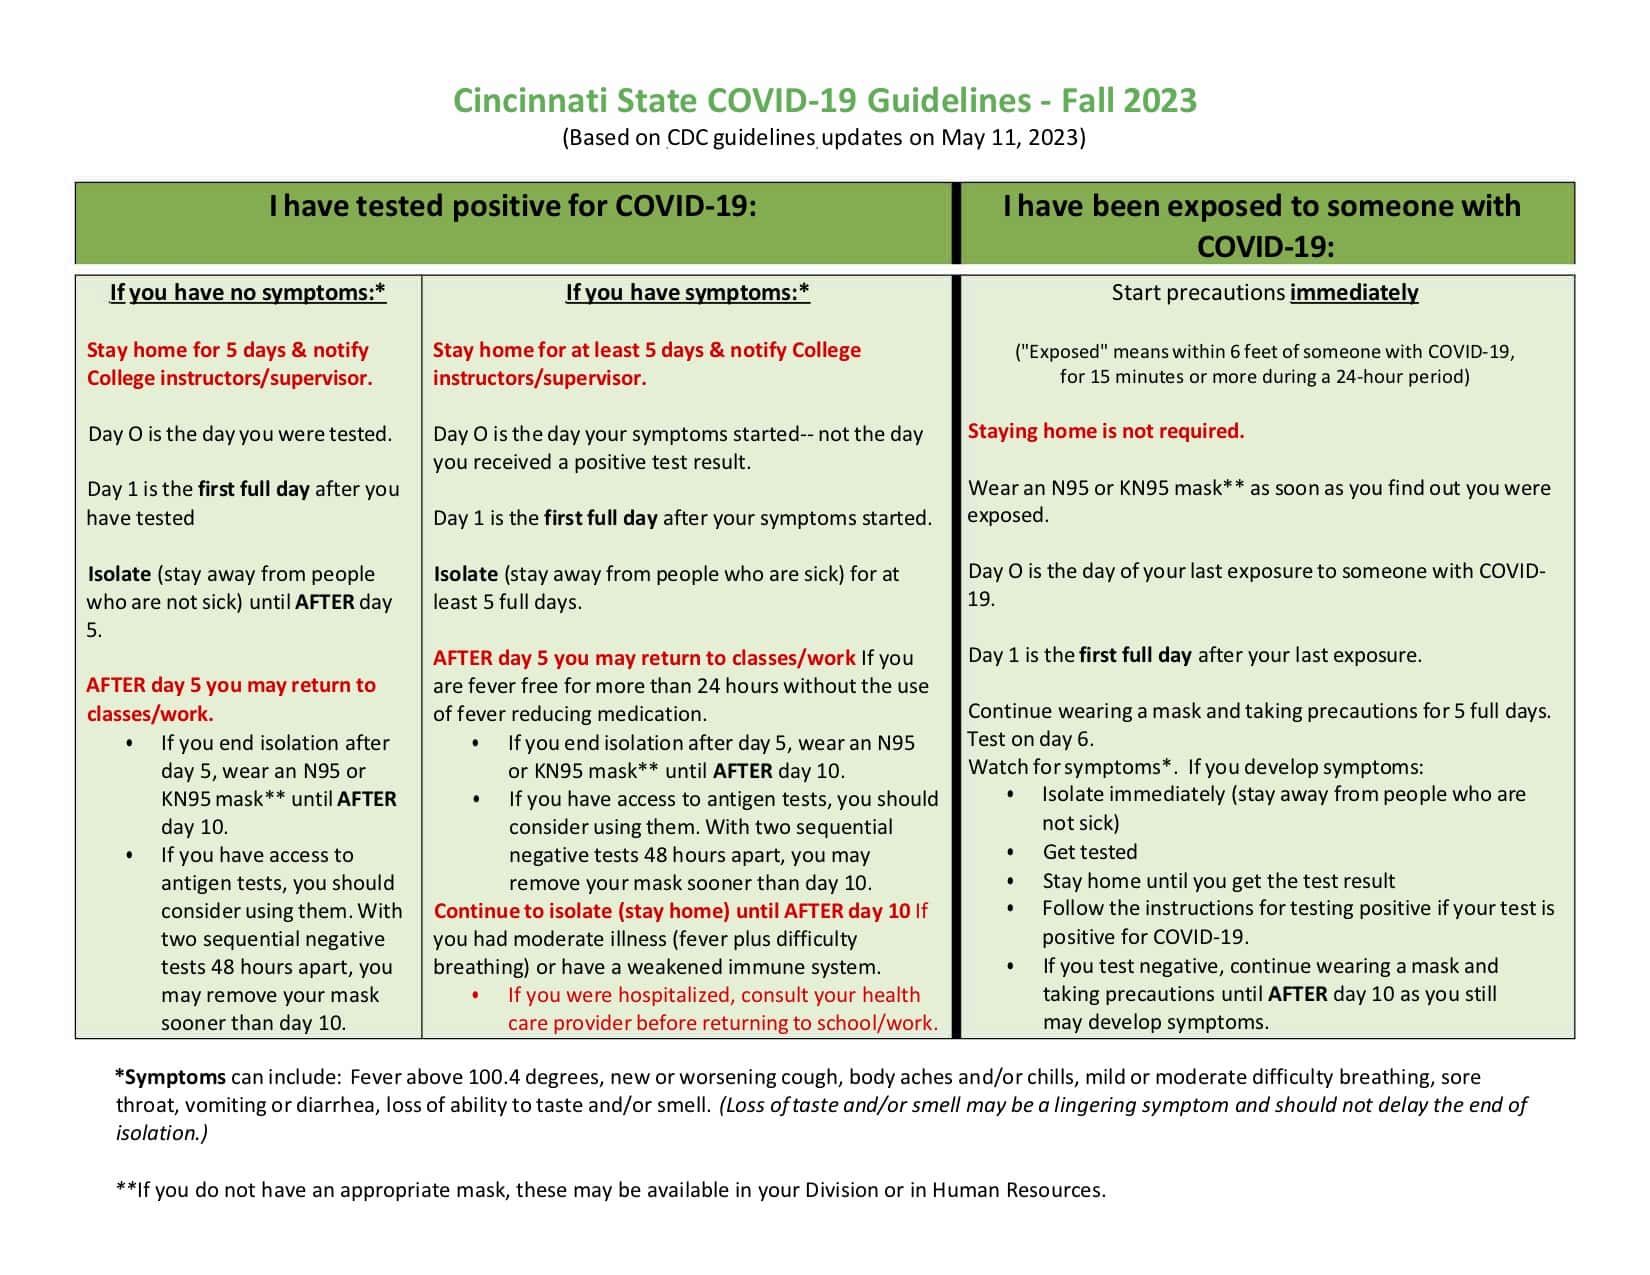 Cincinnati State COVID Guidelines Flowchart - Fall 2023